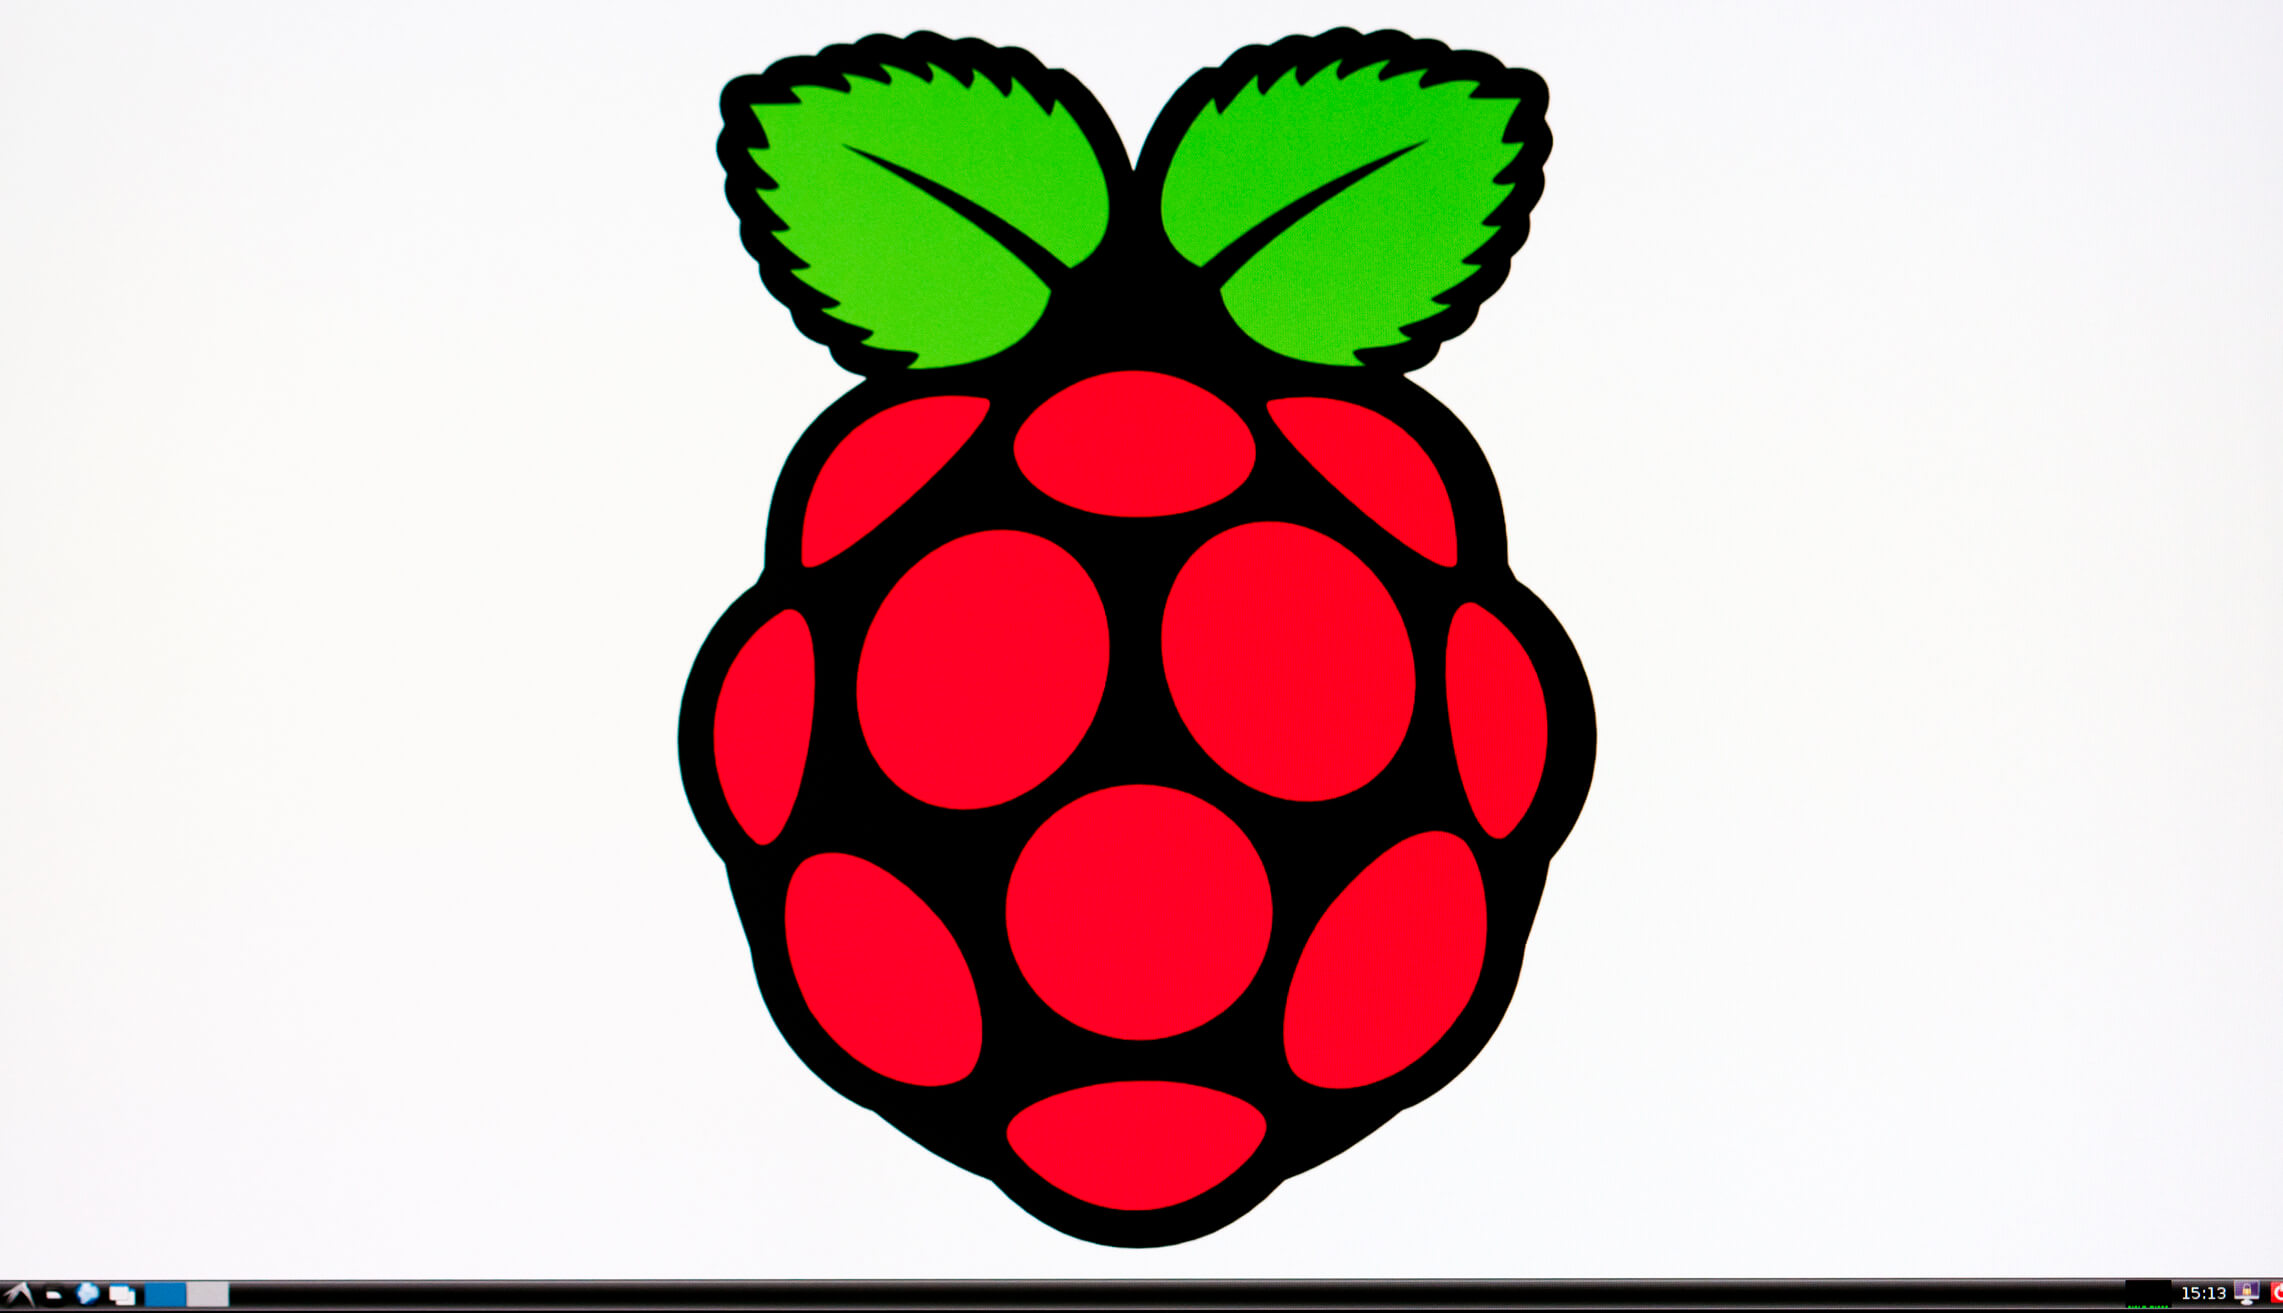 Raspberry Pi logo in white background